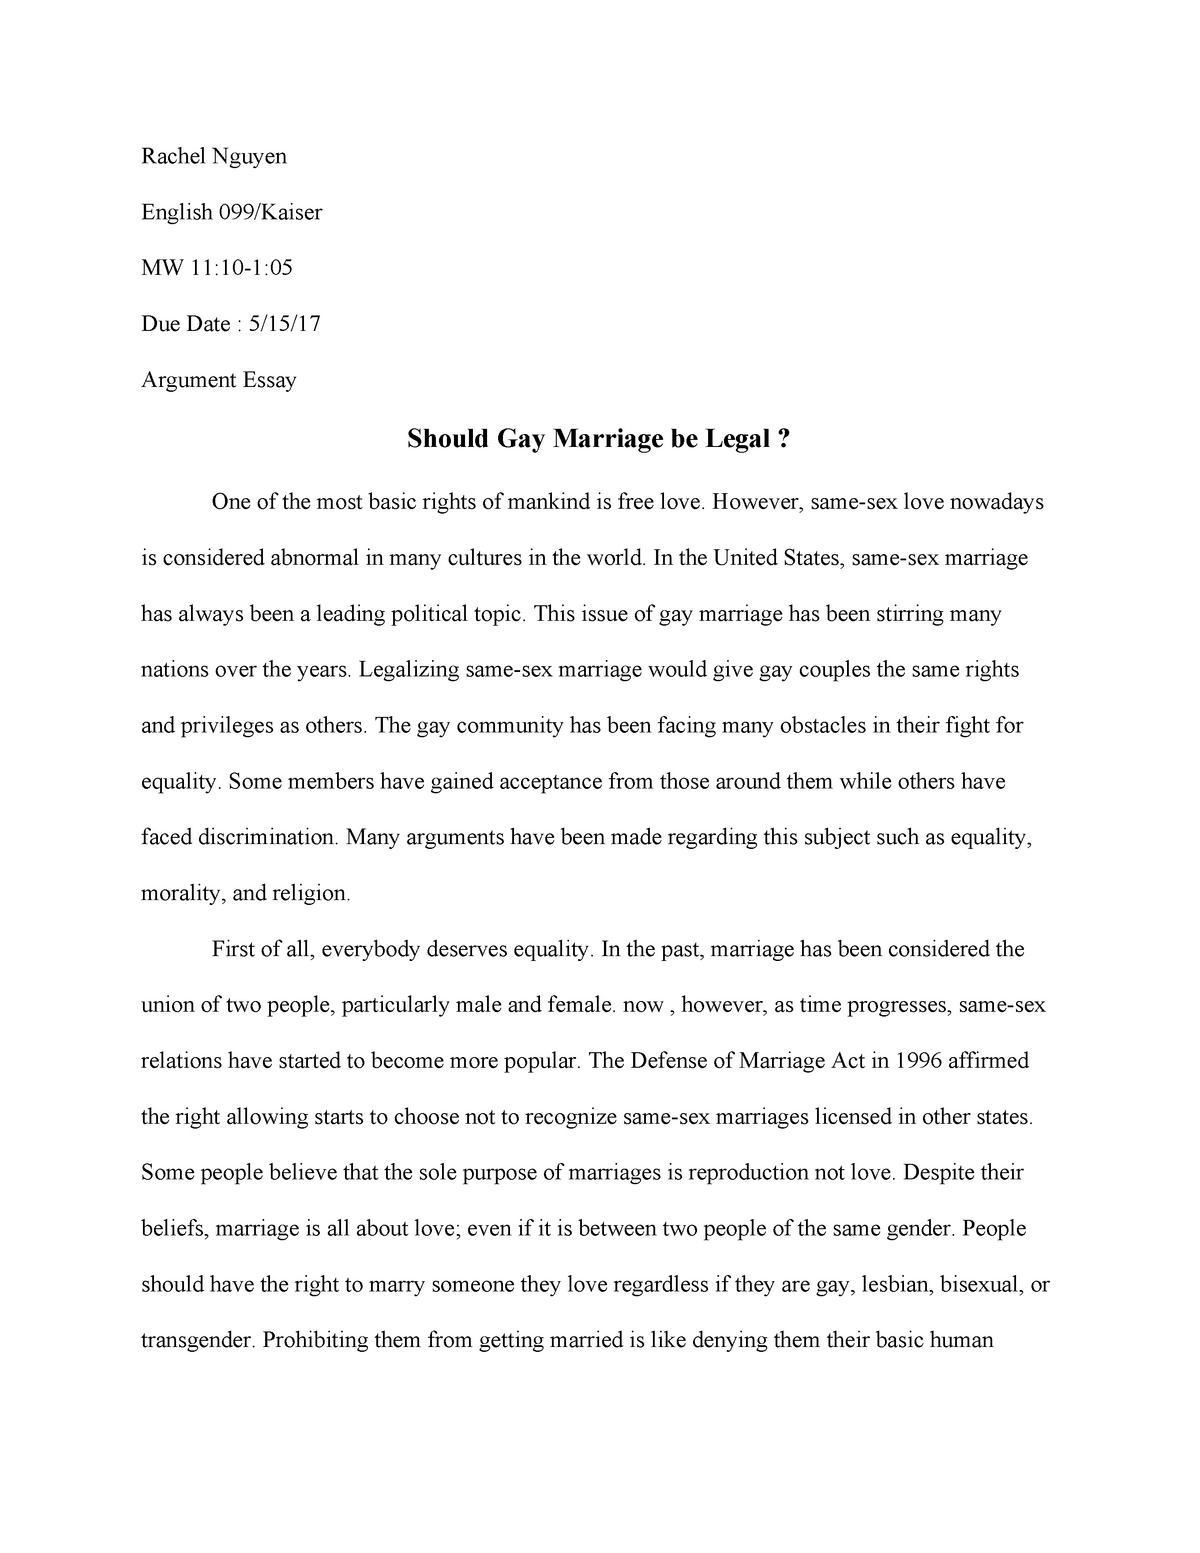 gay marriage essay topics